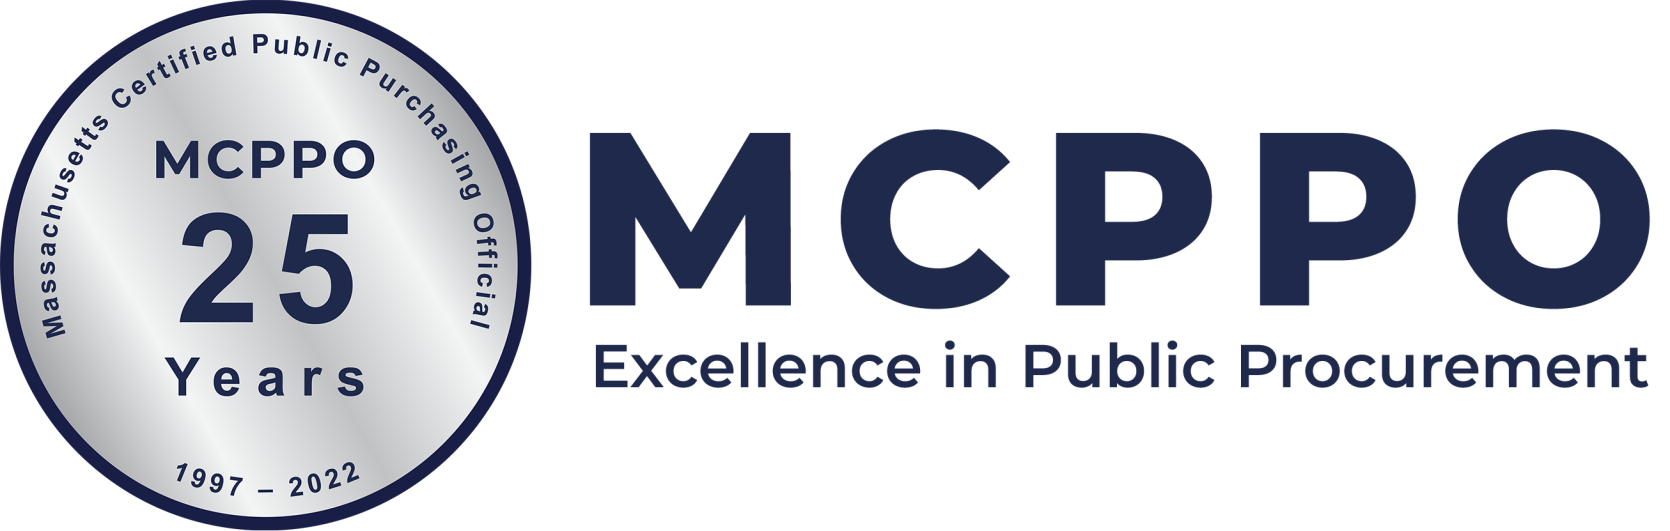 The MCPPO Program celebrates 25 years in 2022.